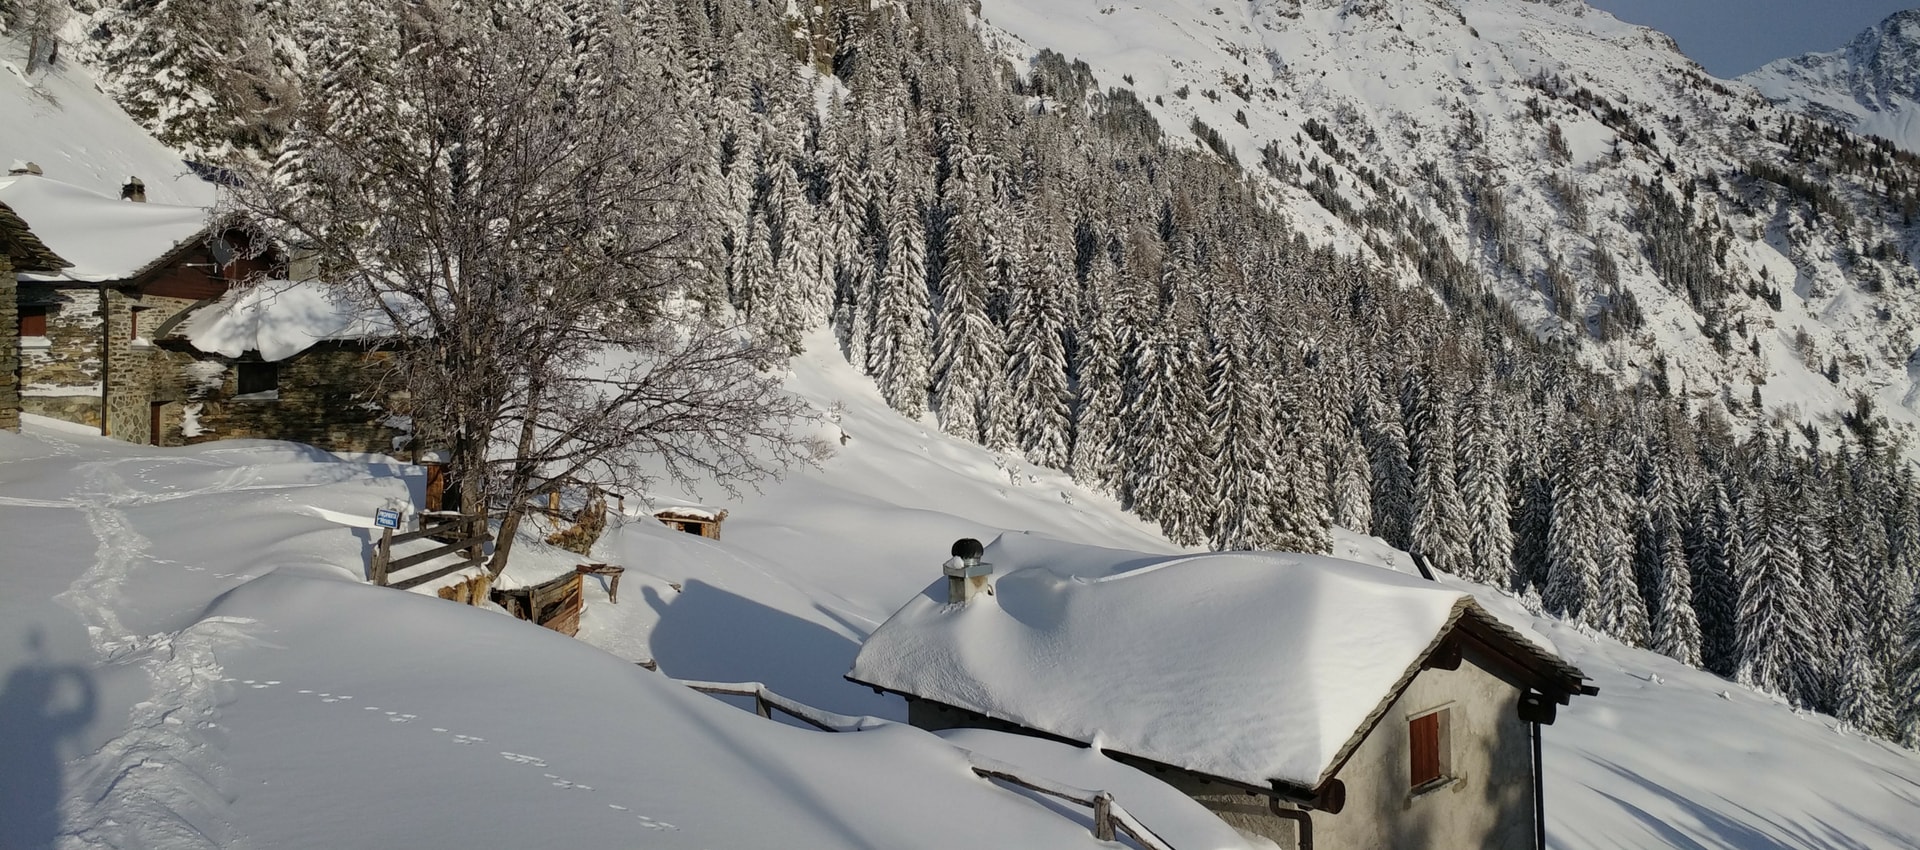 Albergo Stella Alpina - Paesaggio Invernale (2).jpg